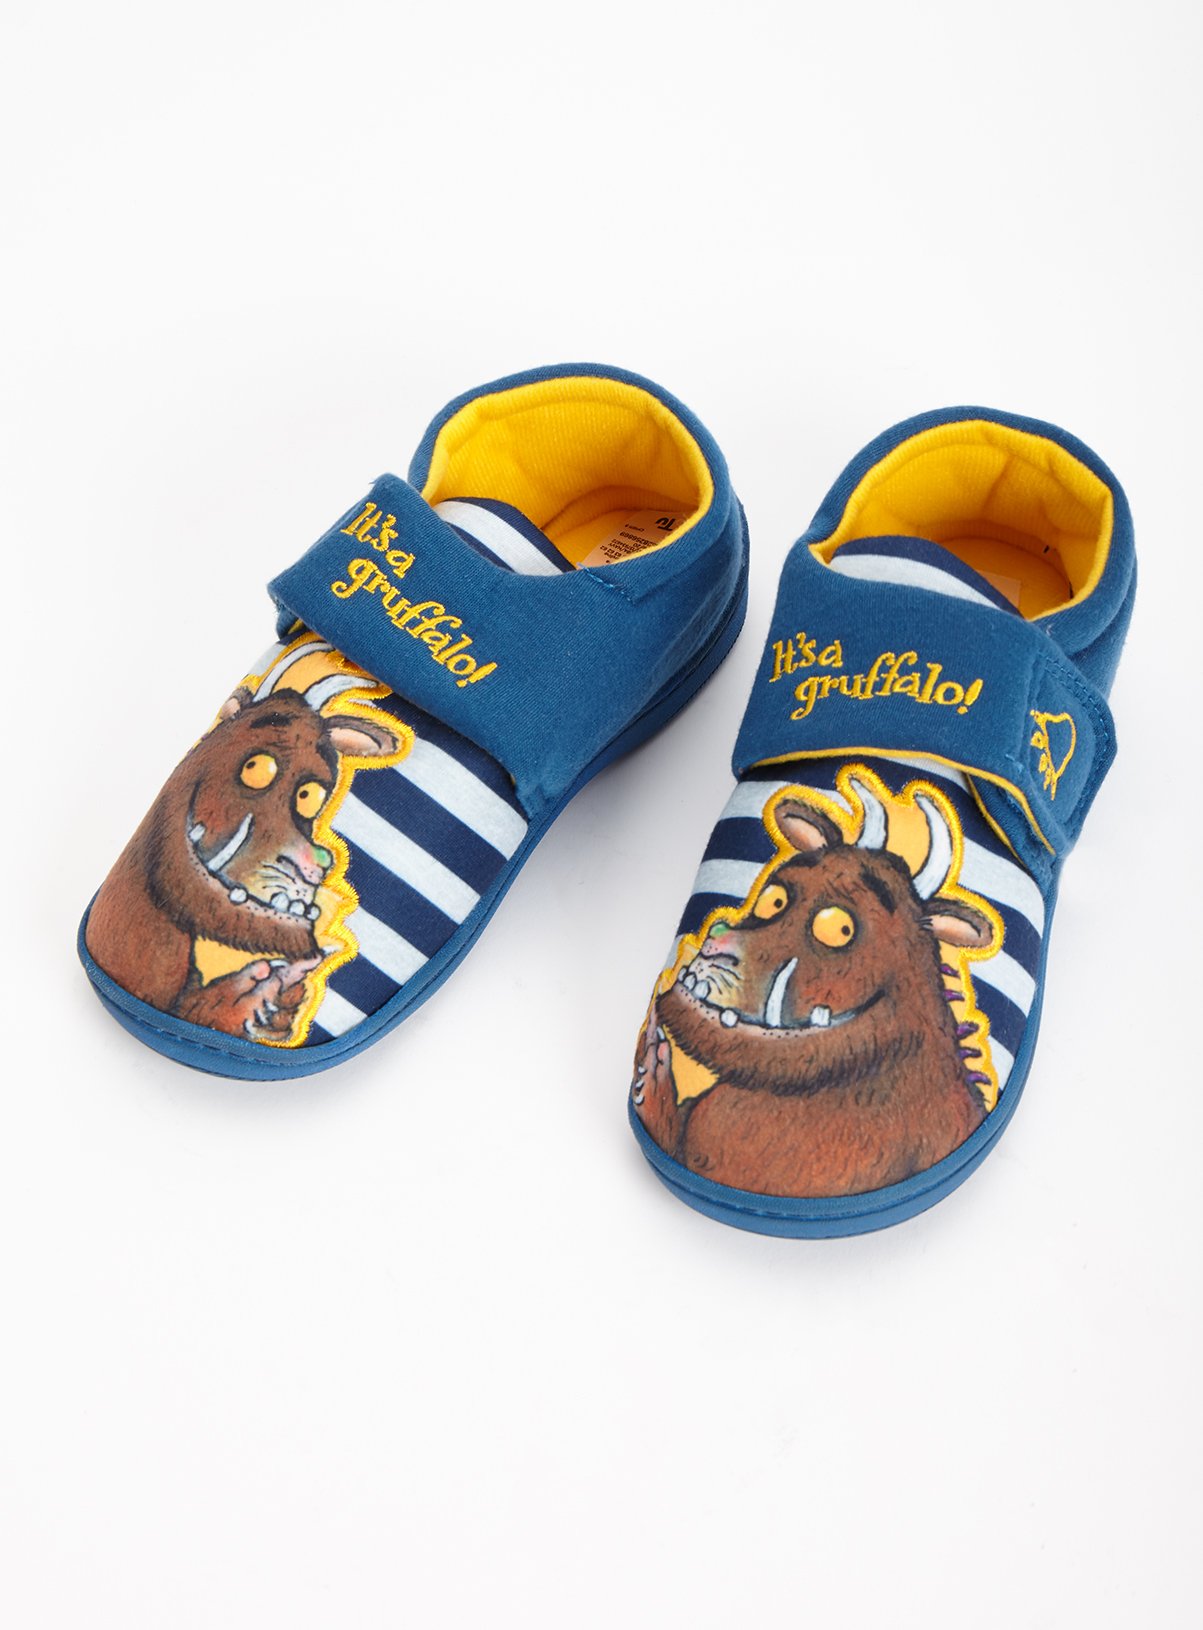 gruffalo slippers